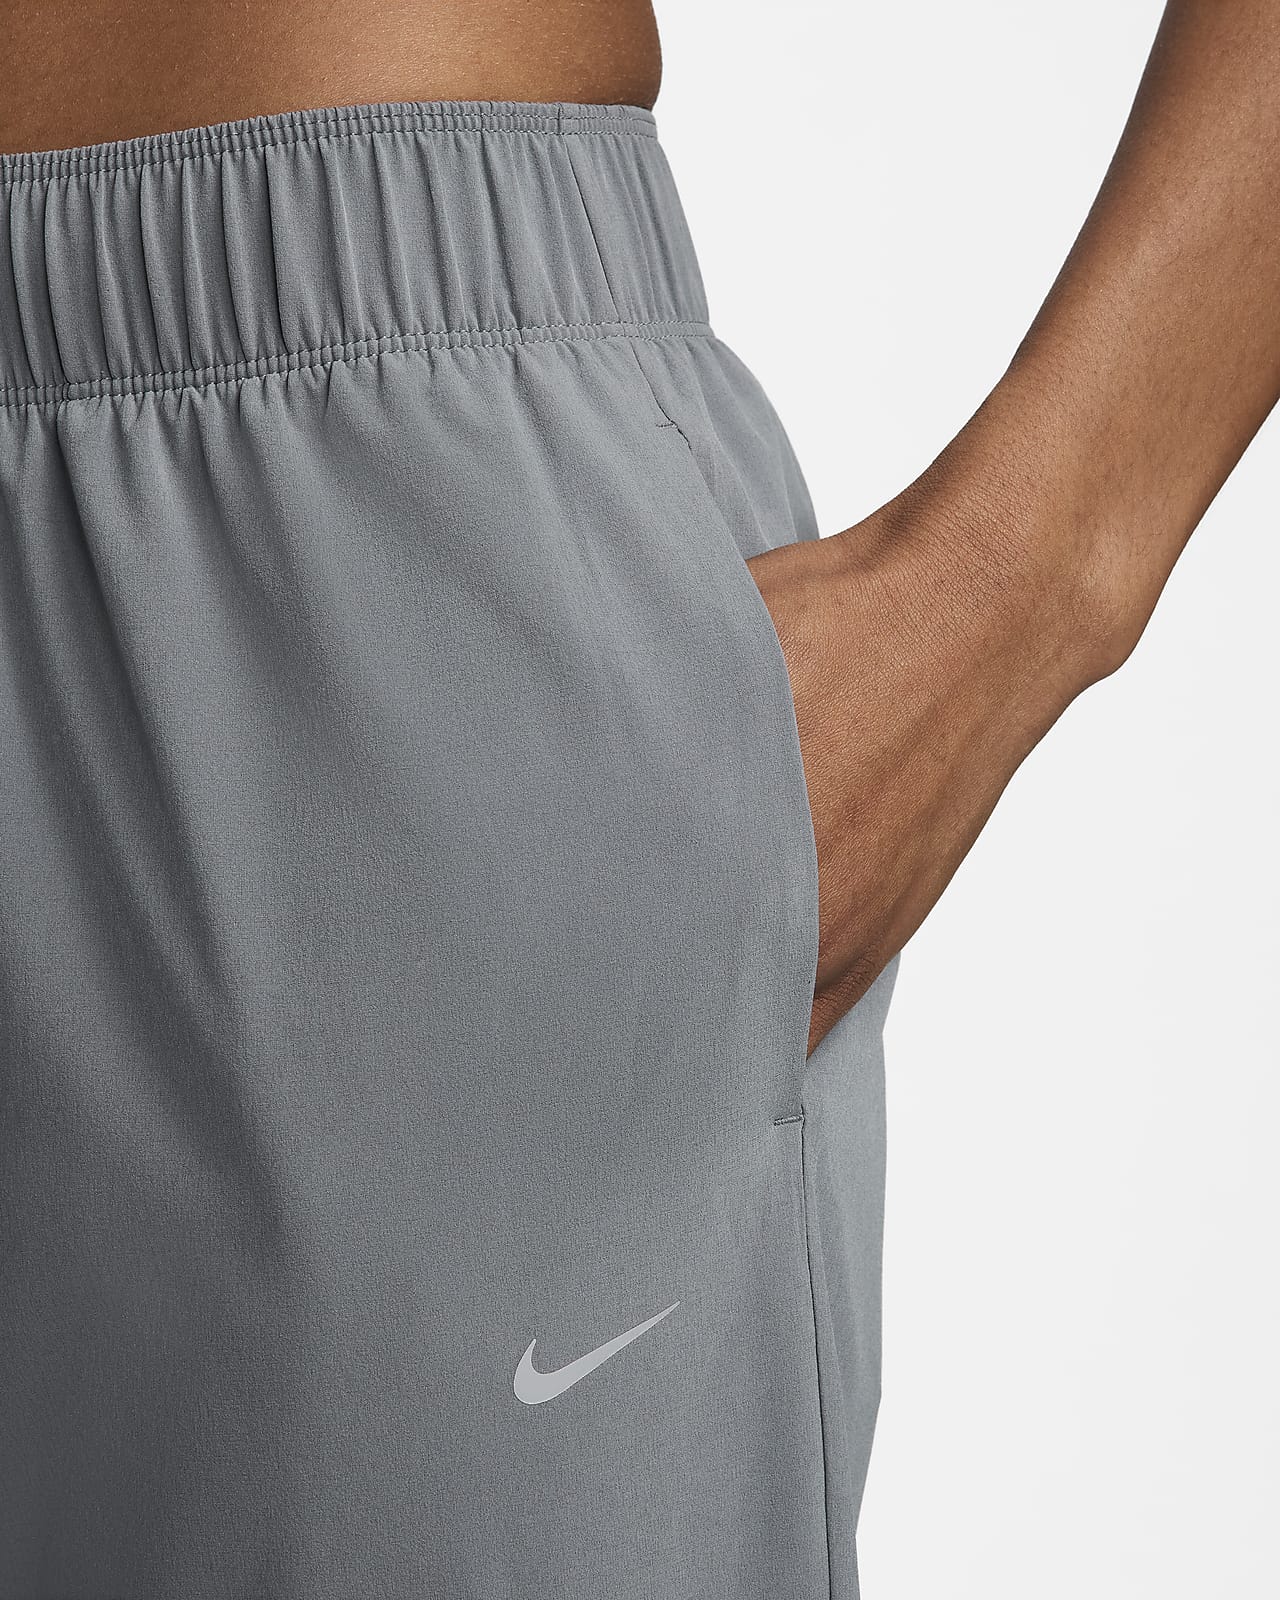 New Nike Dri-Fit Lightweight Wind Resistant Training Women's Pants size M